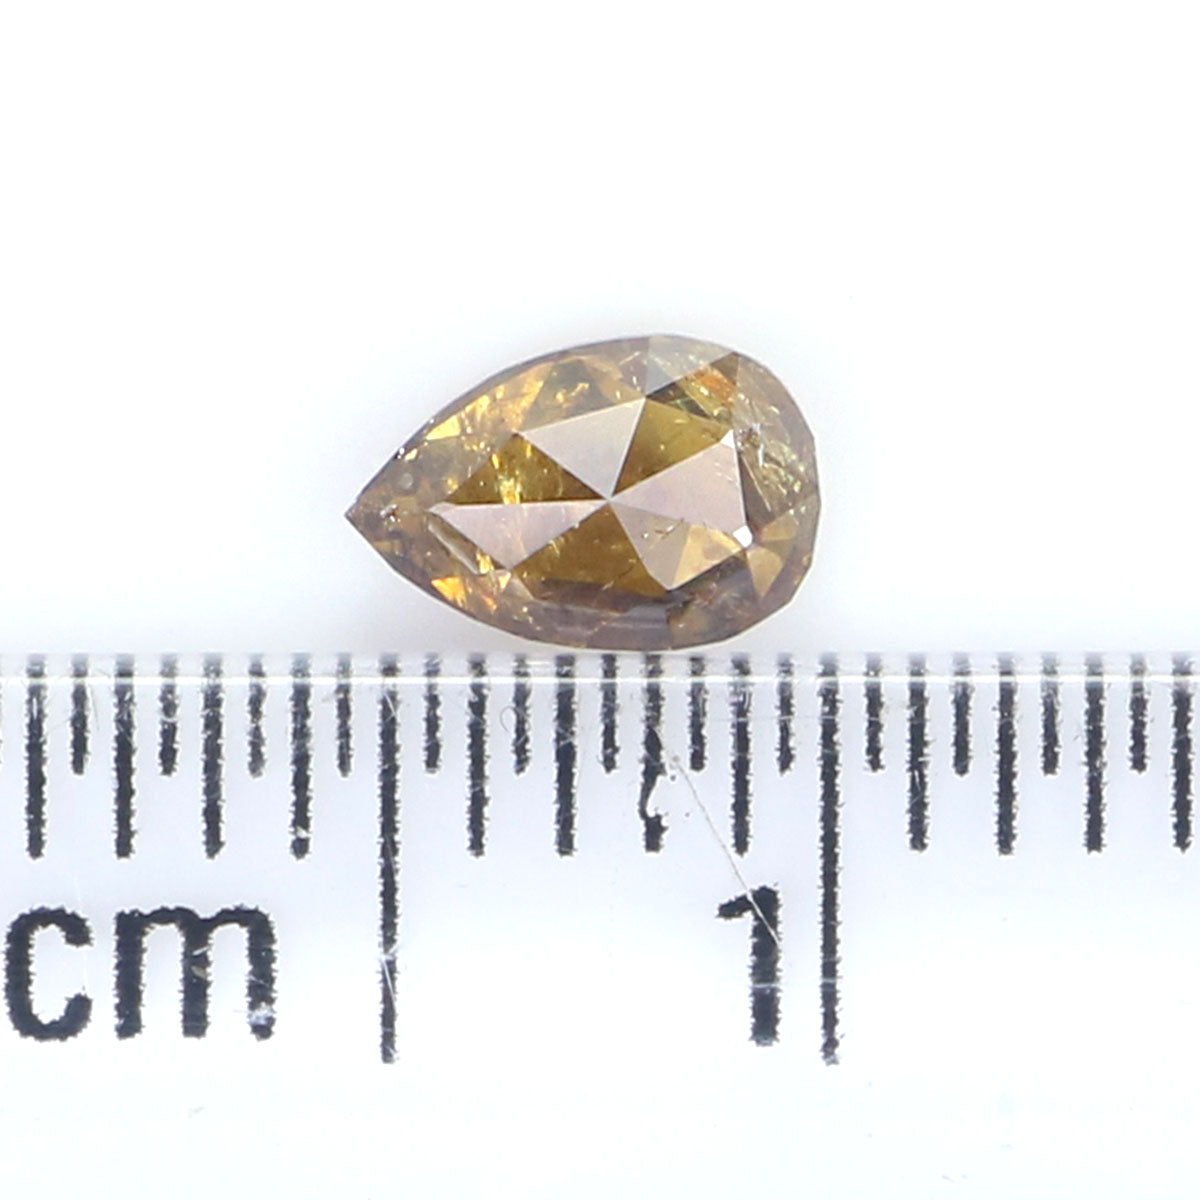 0.39 CT Natural Loose Pear Shape Diamond Brown Color Pear Cut Diamond 5.40 MM Natural Loose Diamond Pear Rose Cut Shape Diamond LQ6095